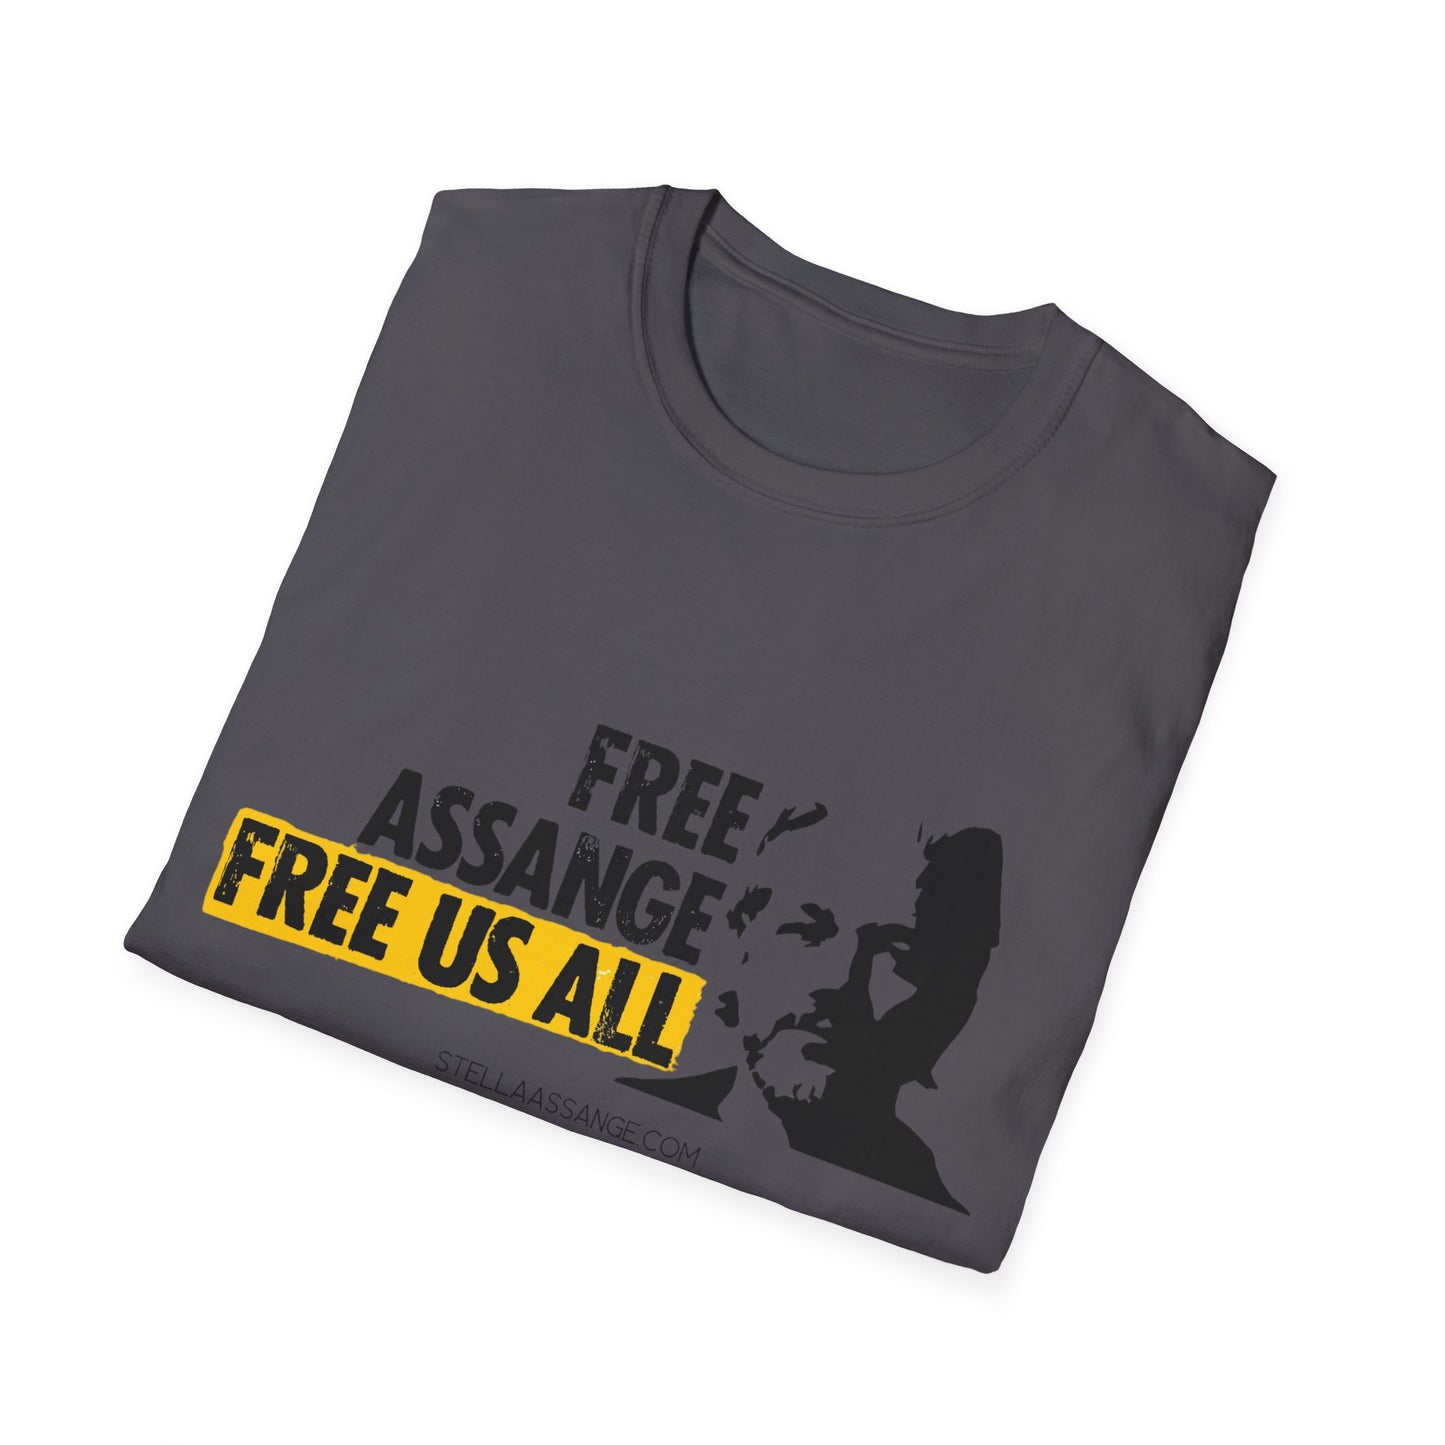 (US) "Free Assange, Free Us All" Unisex Softstyle T-Shirt